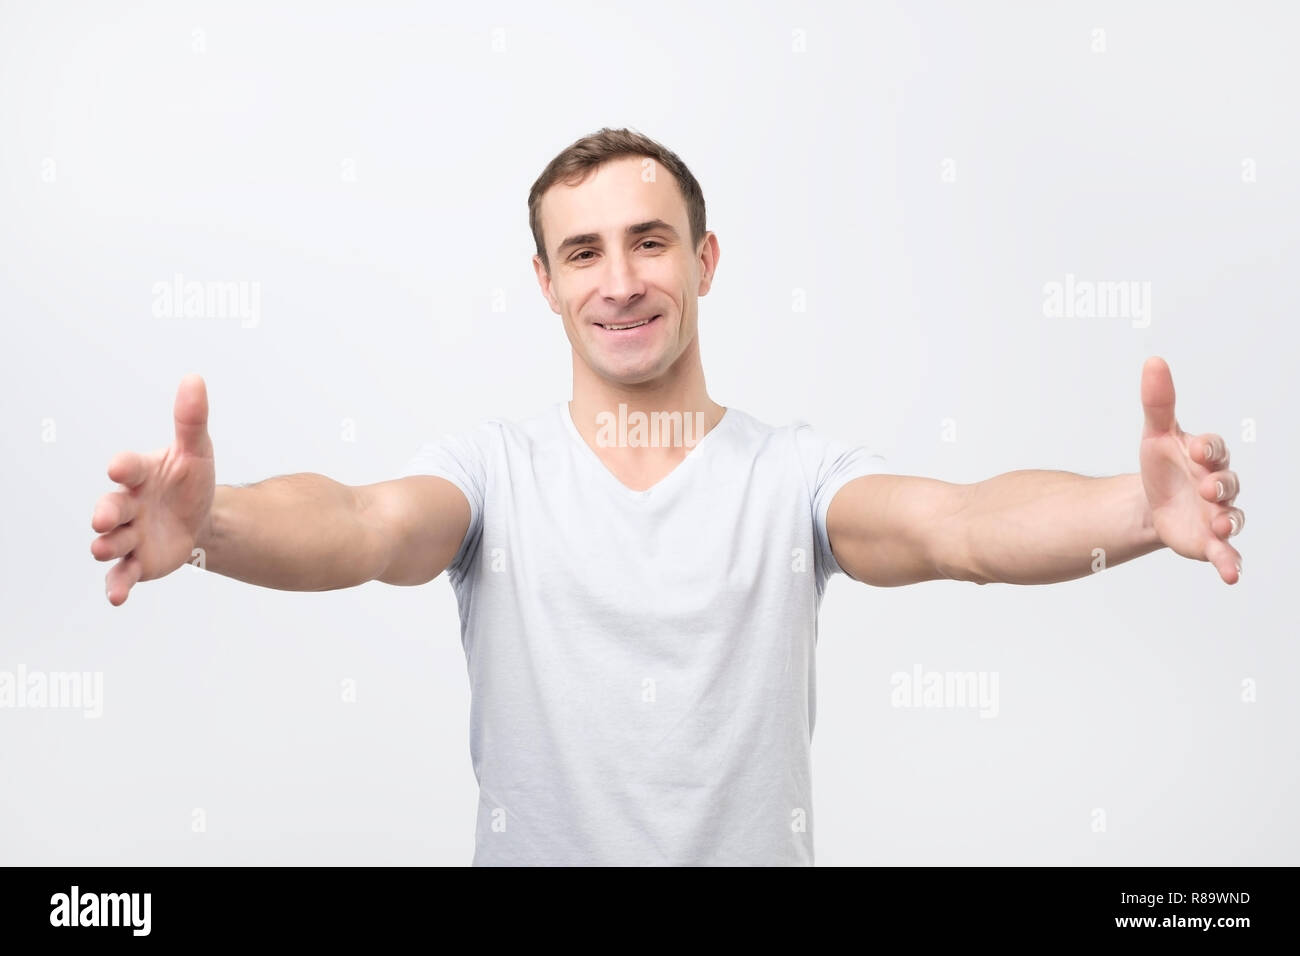 Handsome guy pulling hands towards camera and smiling friendly at camera wanting hug Stock Photo